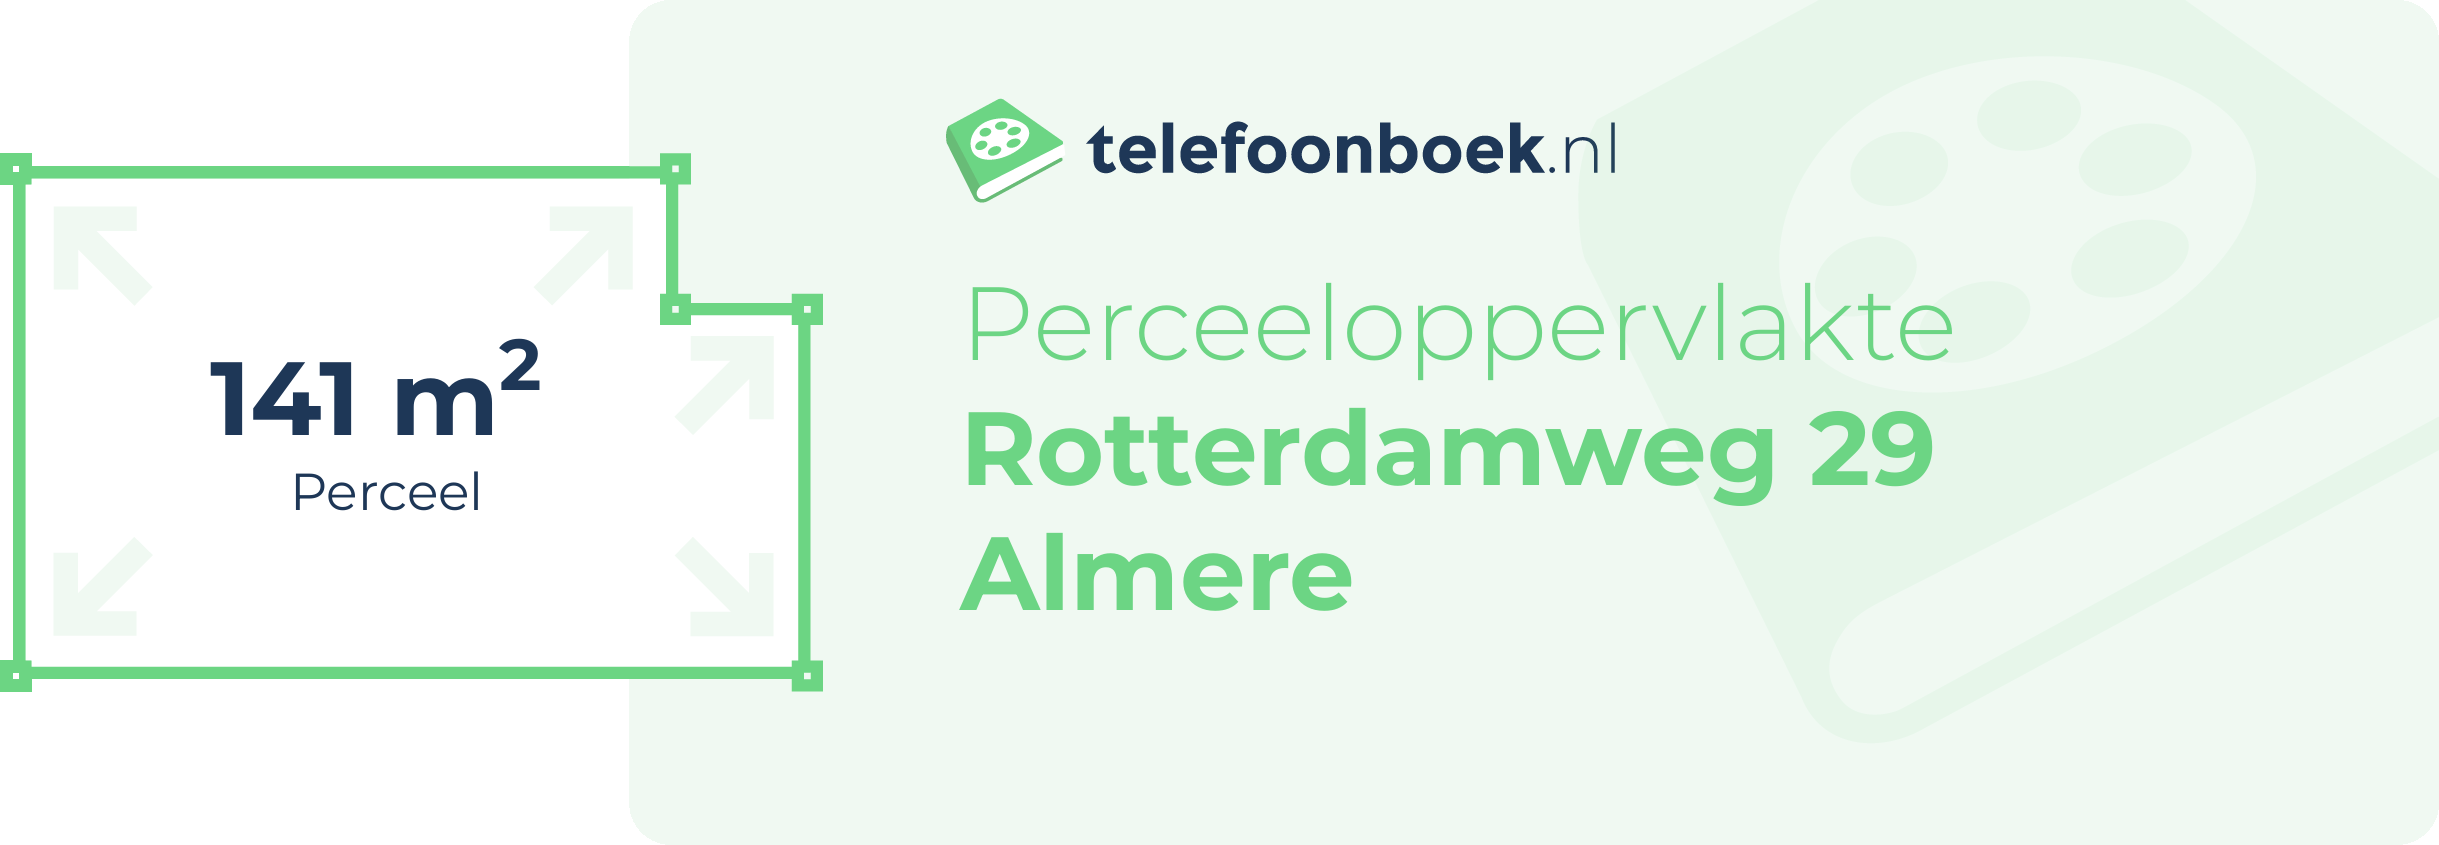 Perceeloppervlakte Rotterdamweg 29 Almere